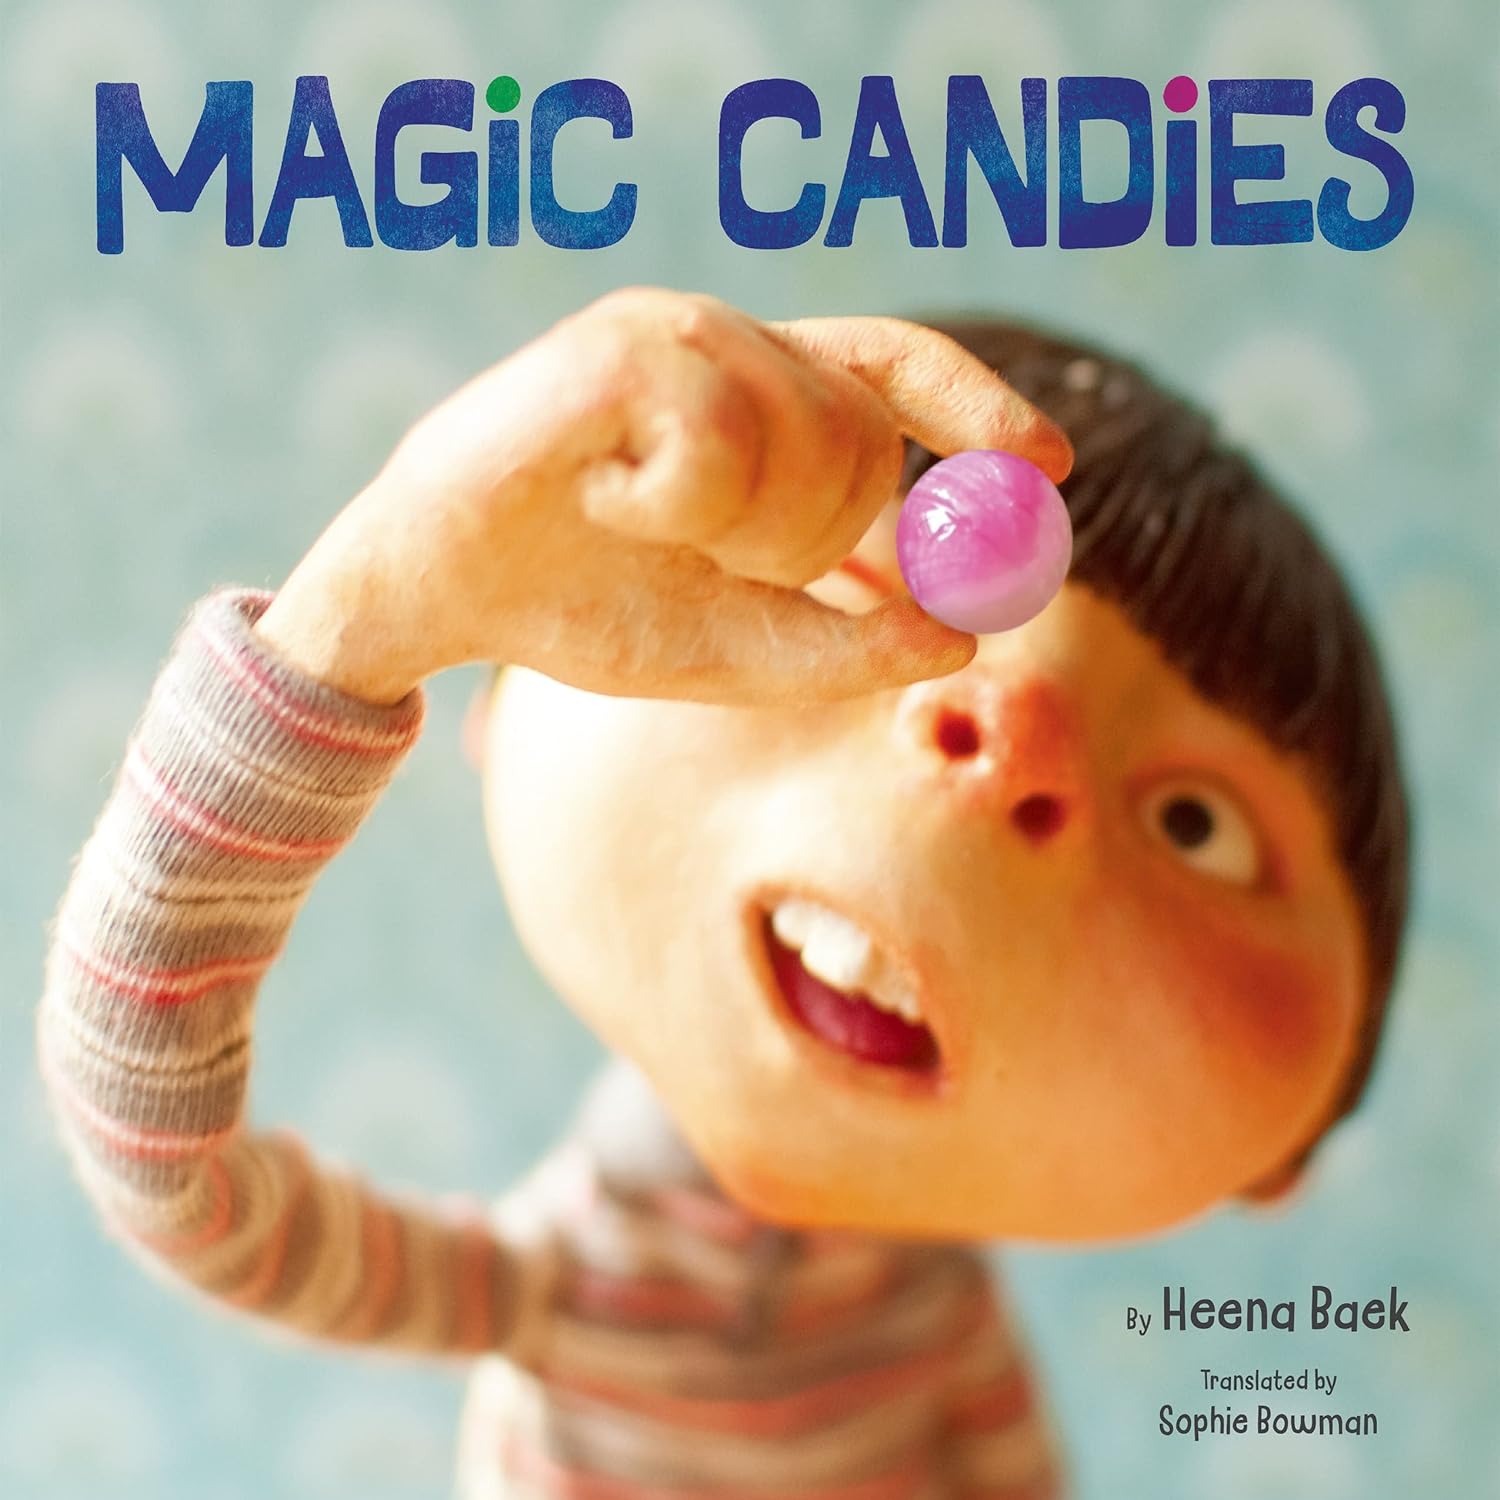 Magic Candies picture book by Heena Baek